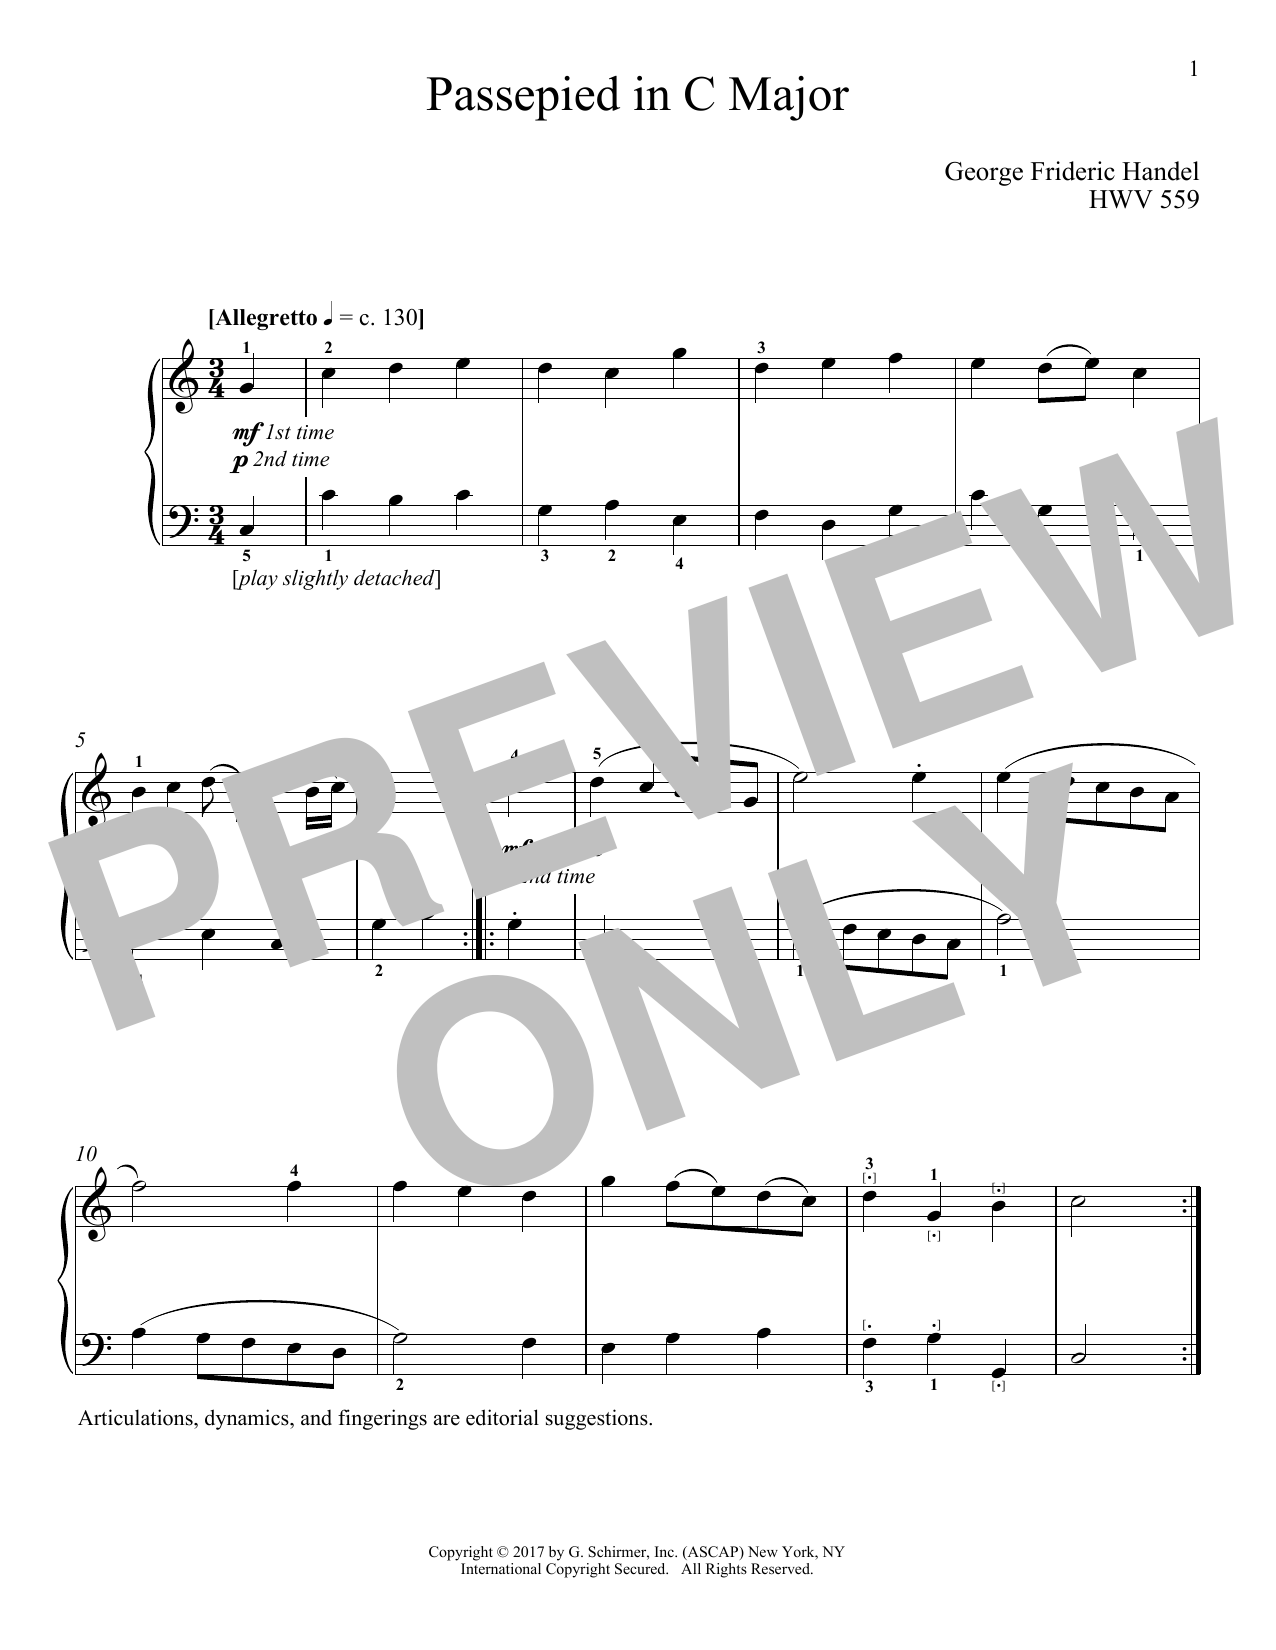 Download George Frideric Handel Passepied In C Major, HWV 559 Sheet Music